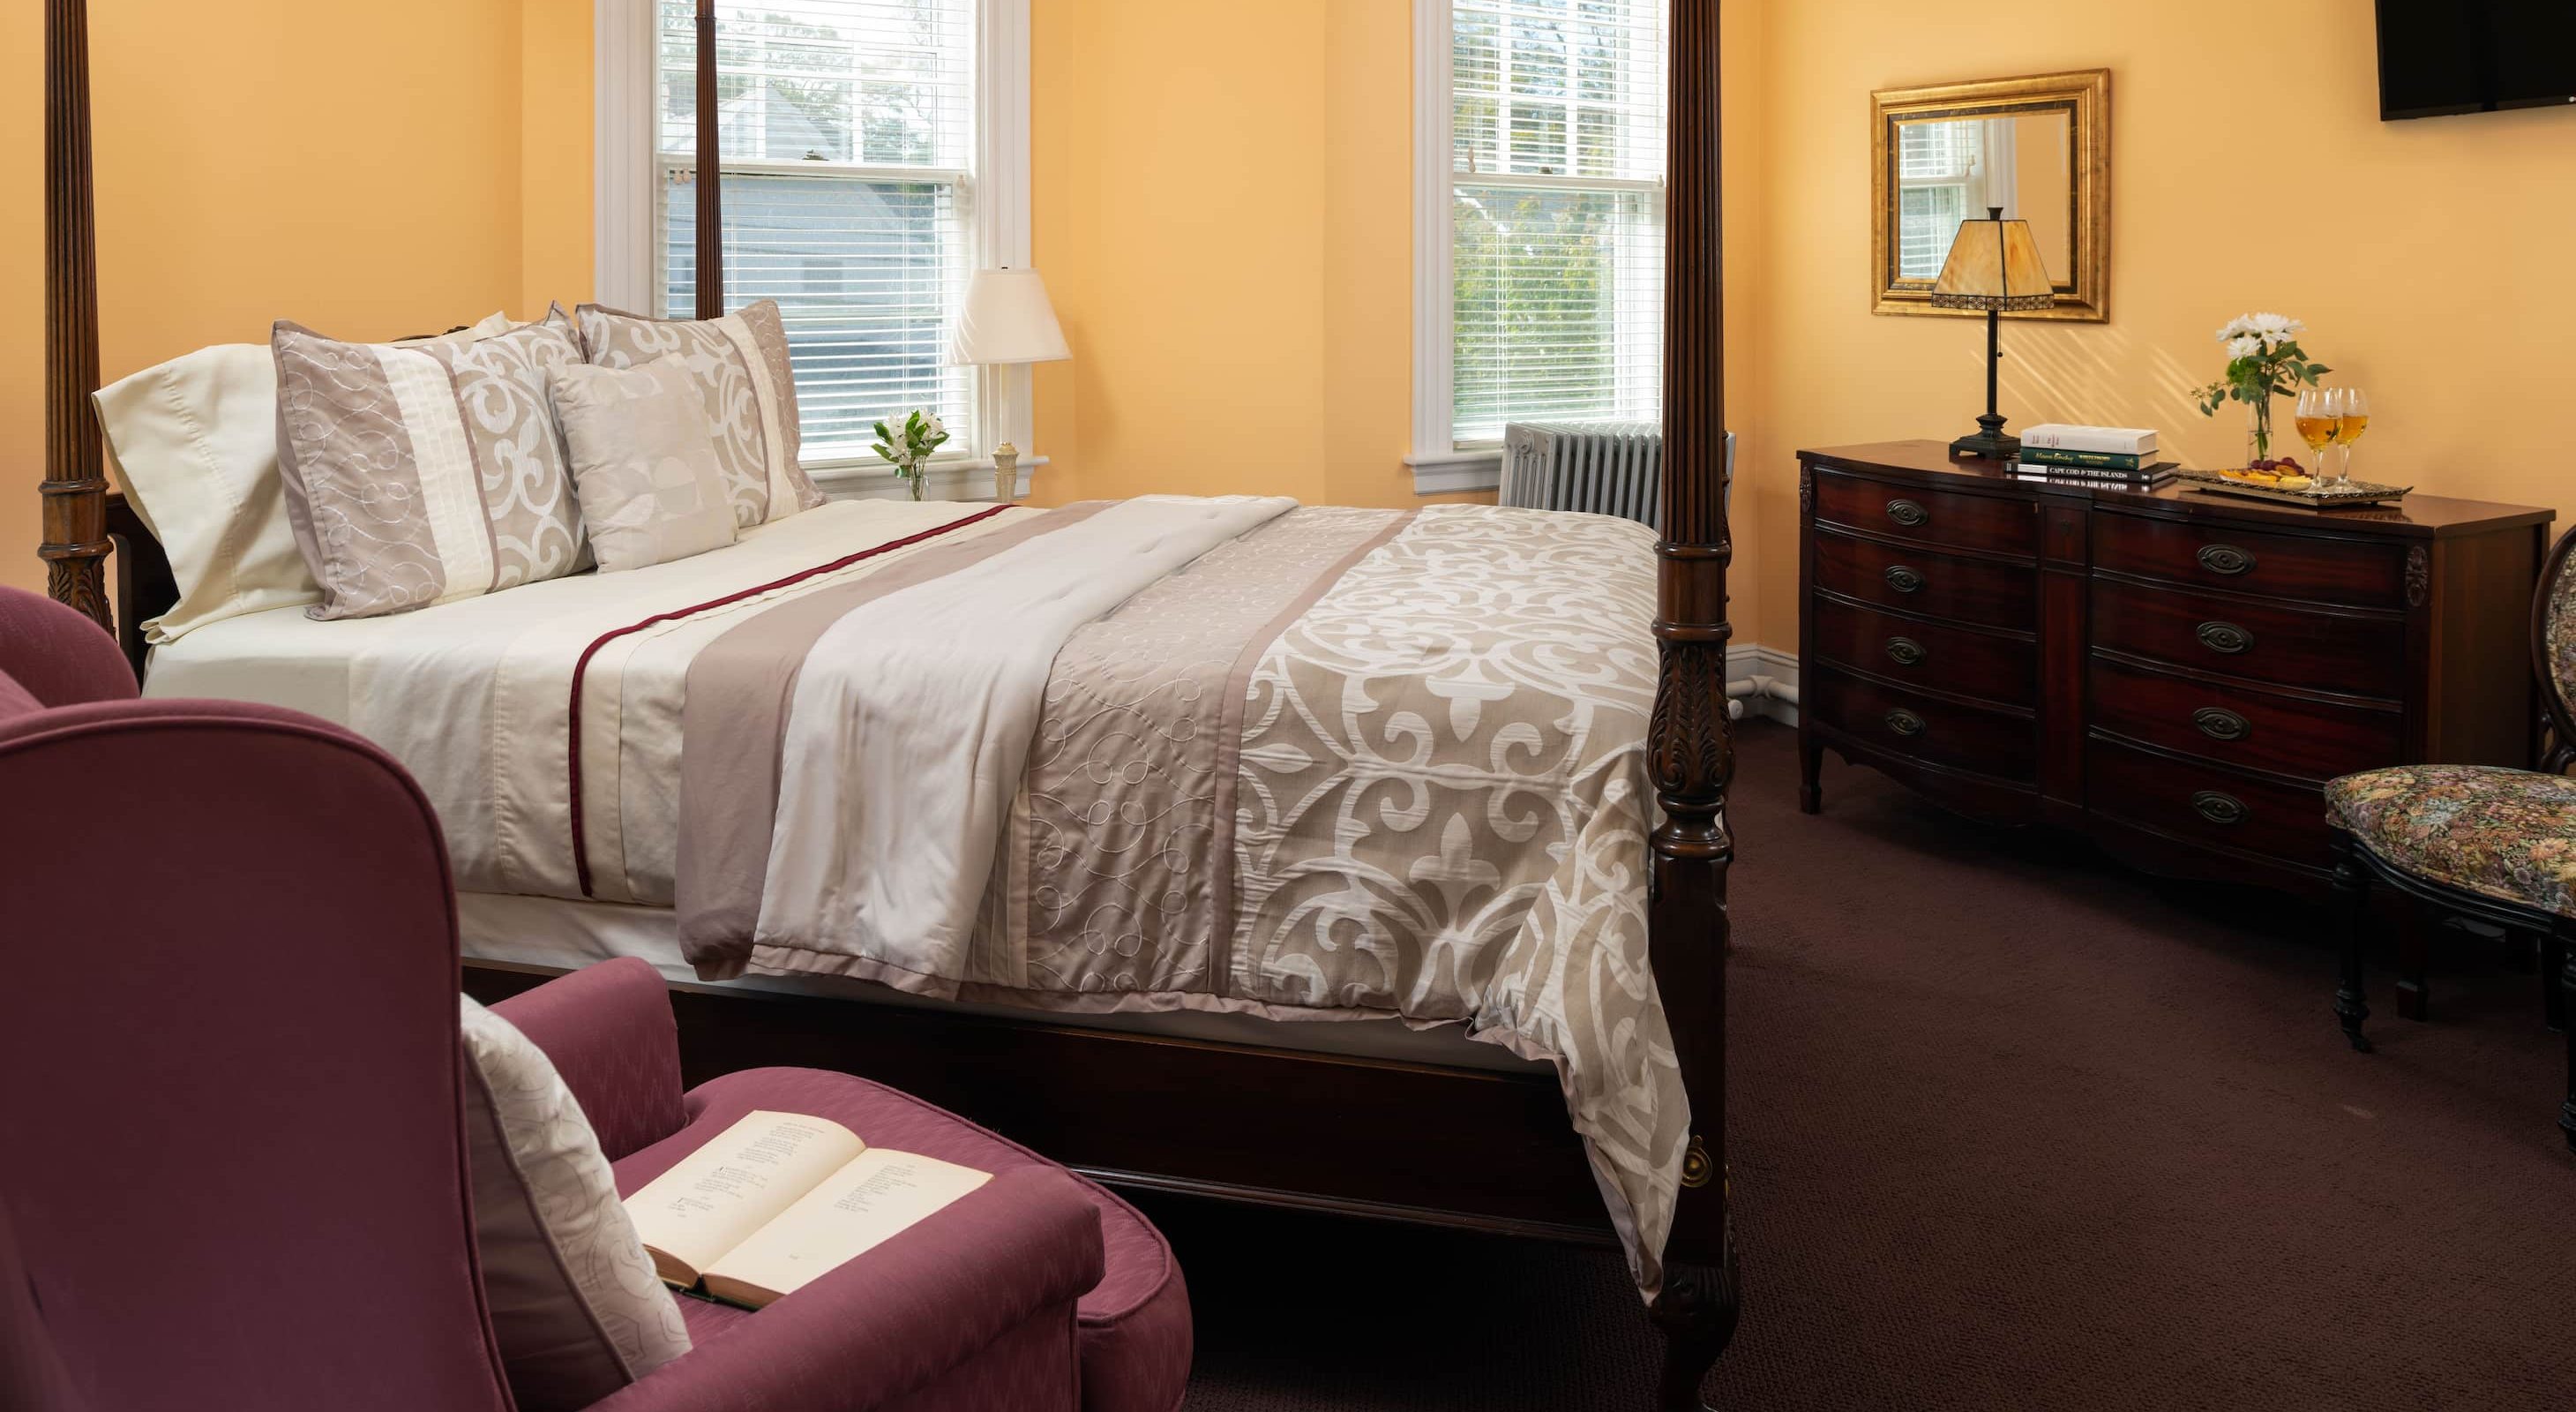 Massachusetts accommodations in the Edith Wharton Room